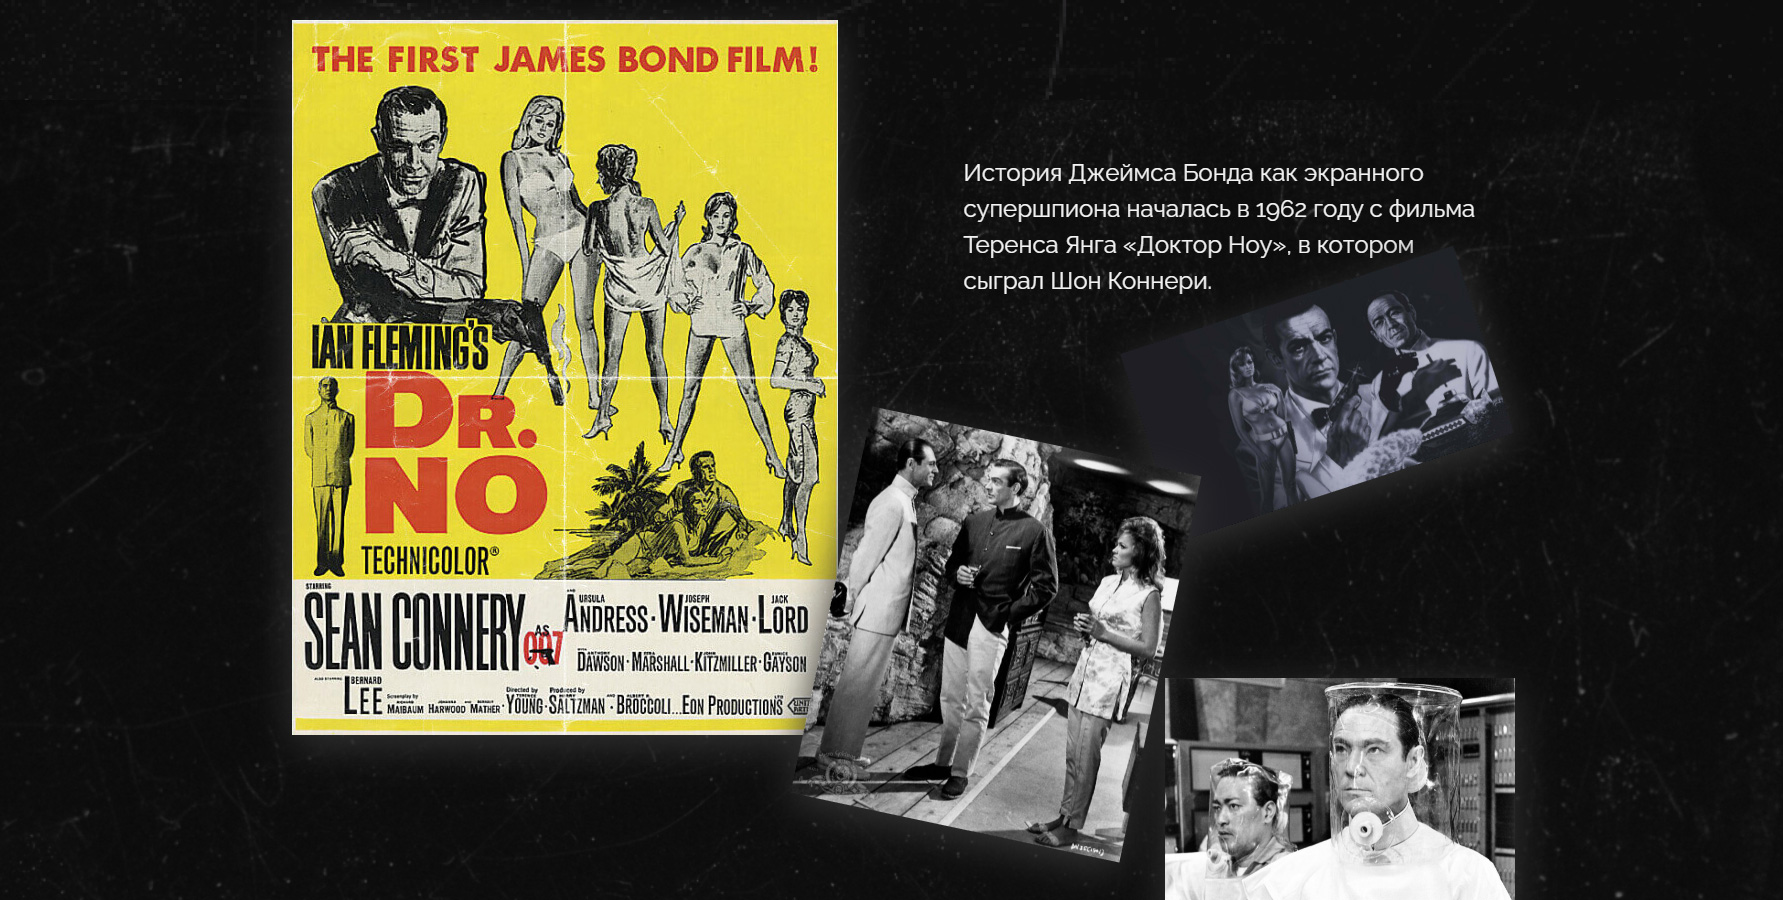 James Bond - Era of Daniel Craig - Website of the Day